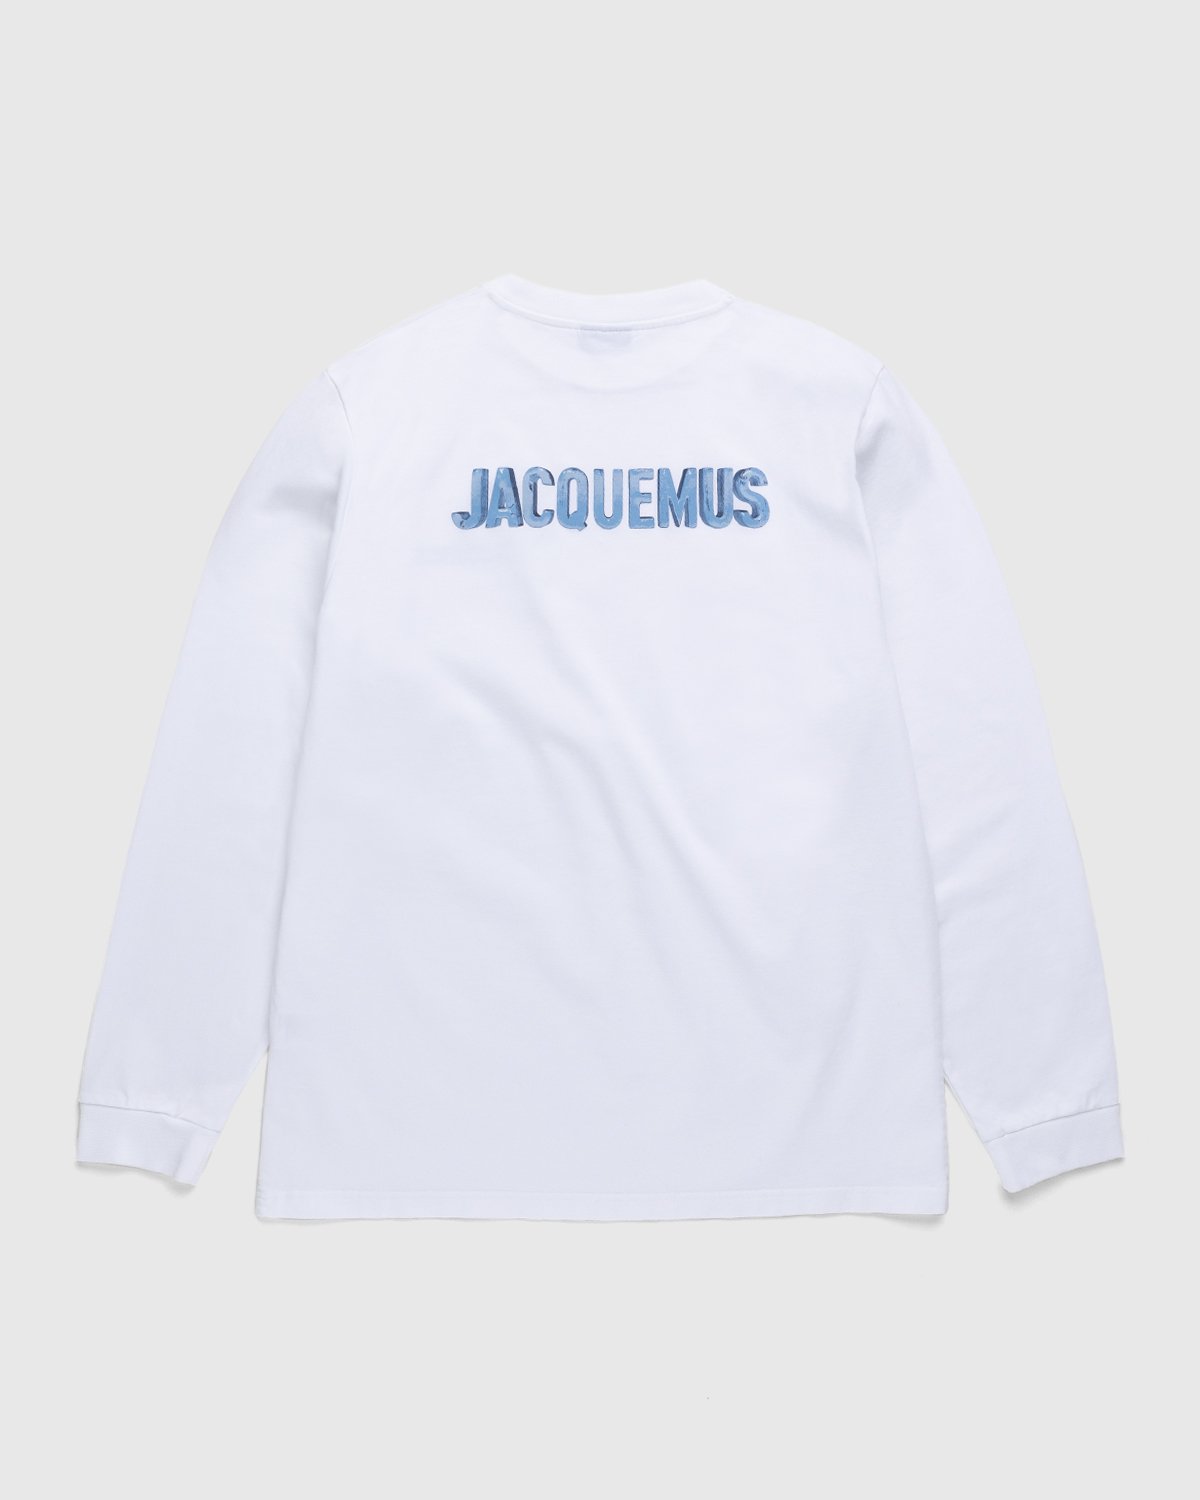 JACQUEMUS - Le T-Shirt Gelo Print Ice Jacquemus White - Clothing - White - Image 2